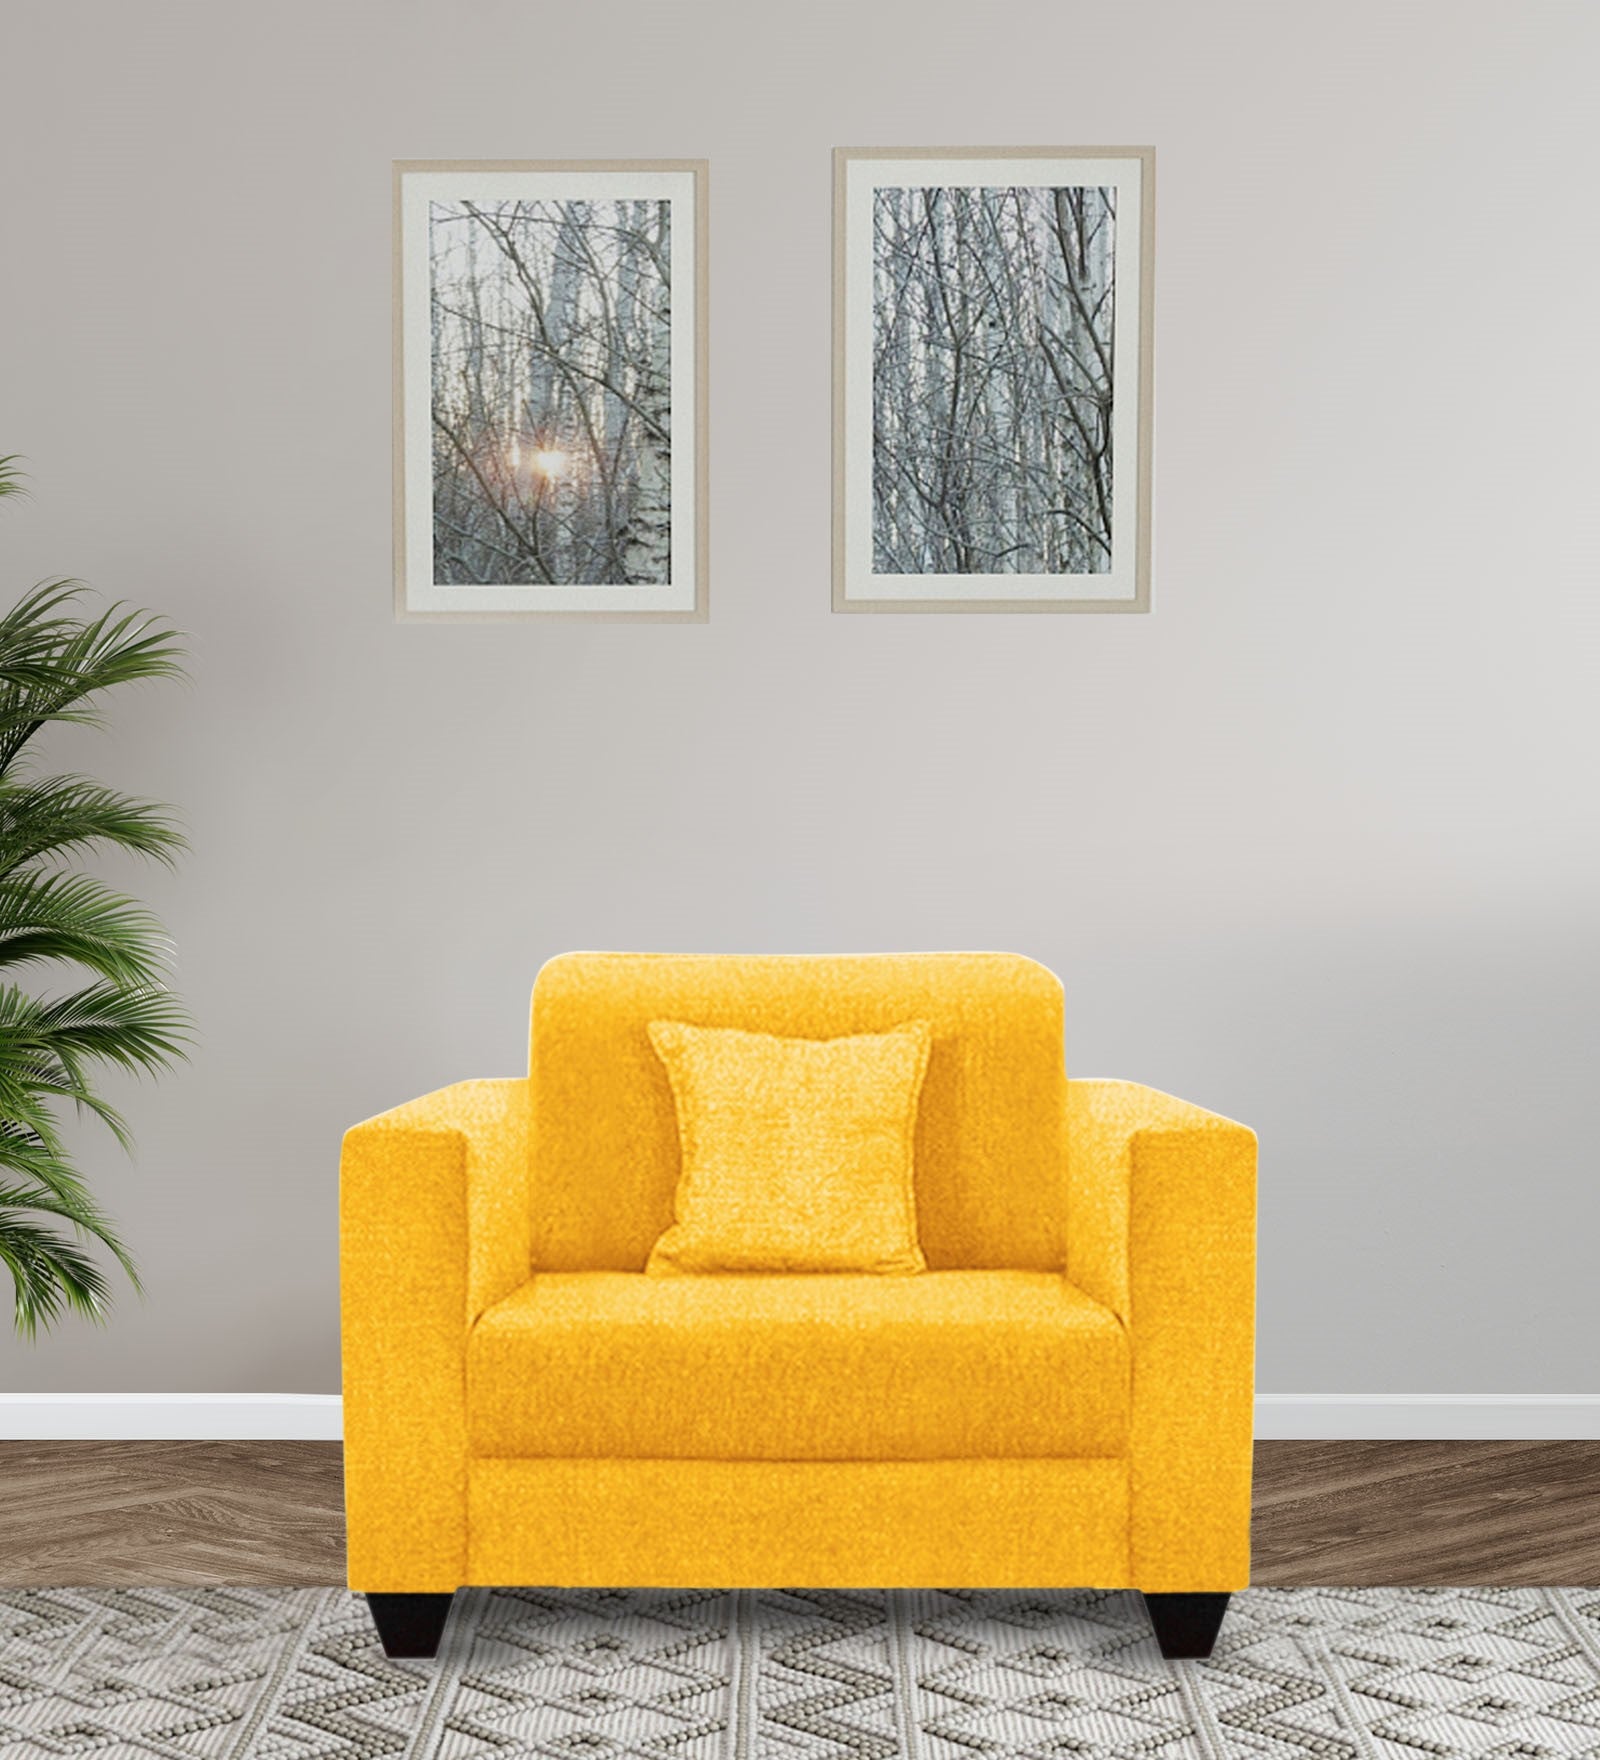 Nebula Fabric 1 Seater Sofa in Bold Yellow Colour